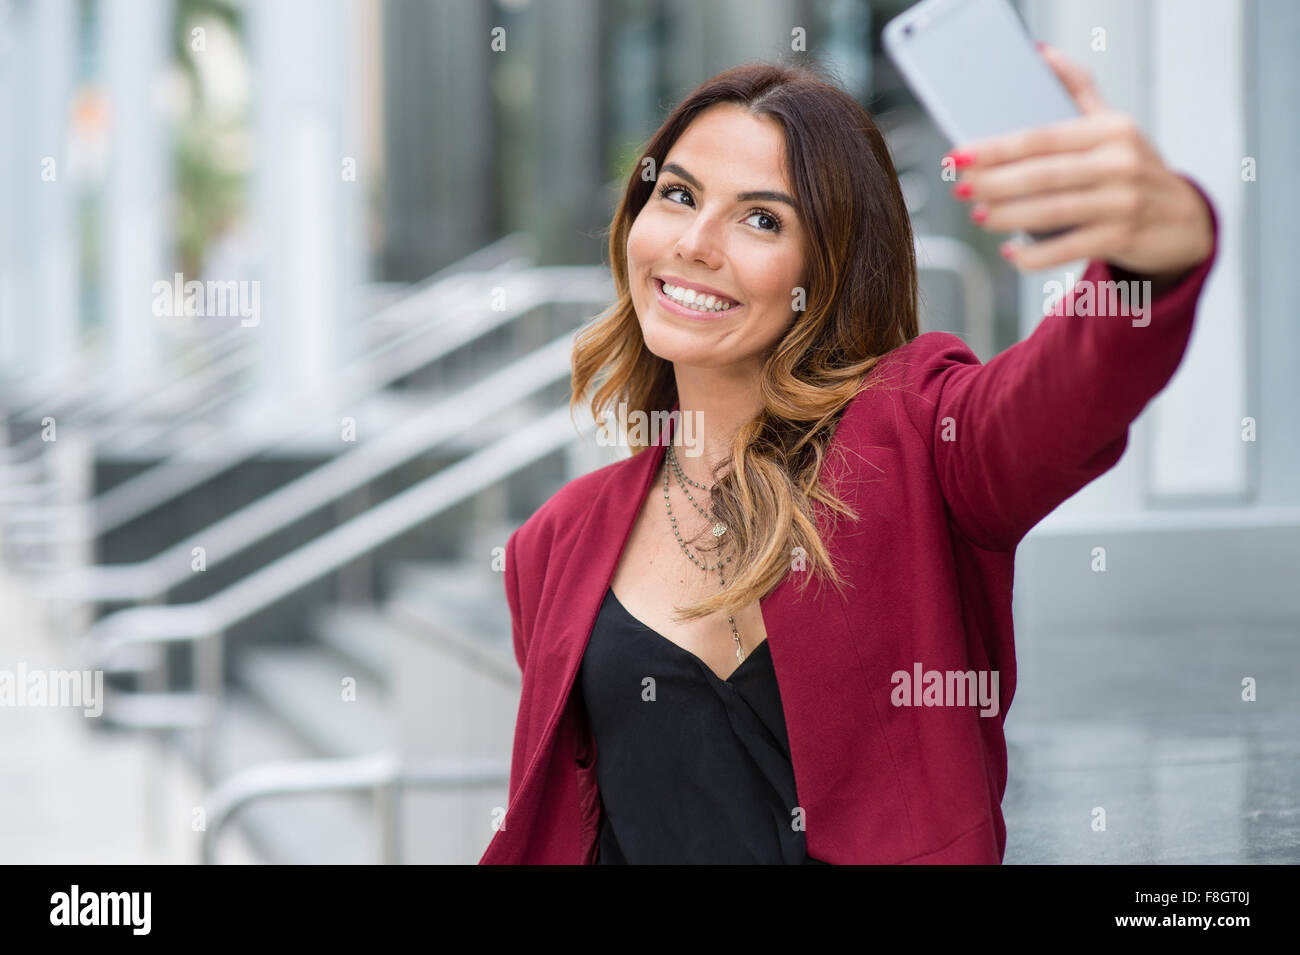 Hispanic businesswoman taking selfie outdoors Stock Photo